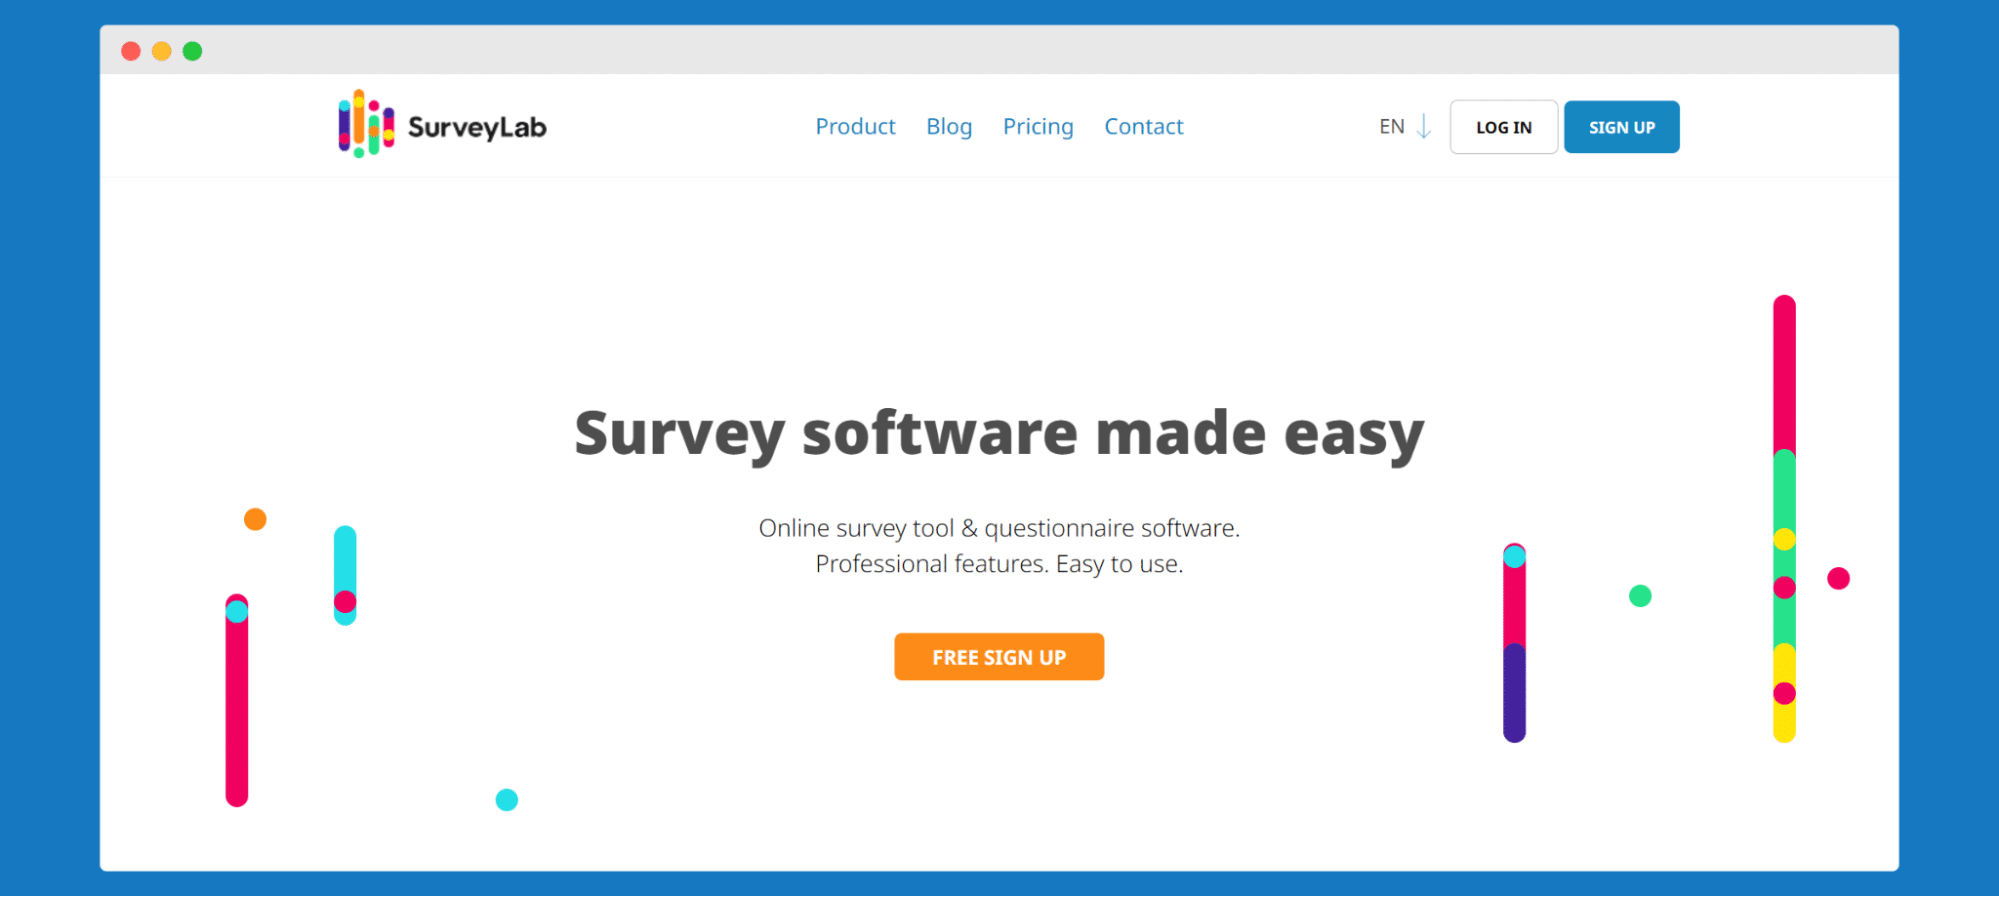 SurveyLab's homepage